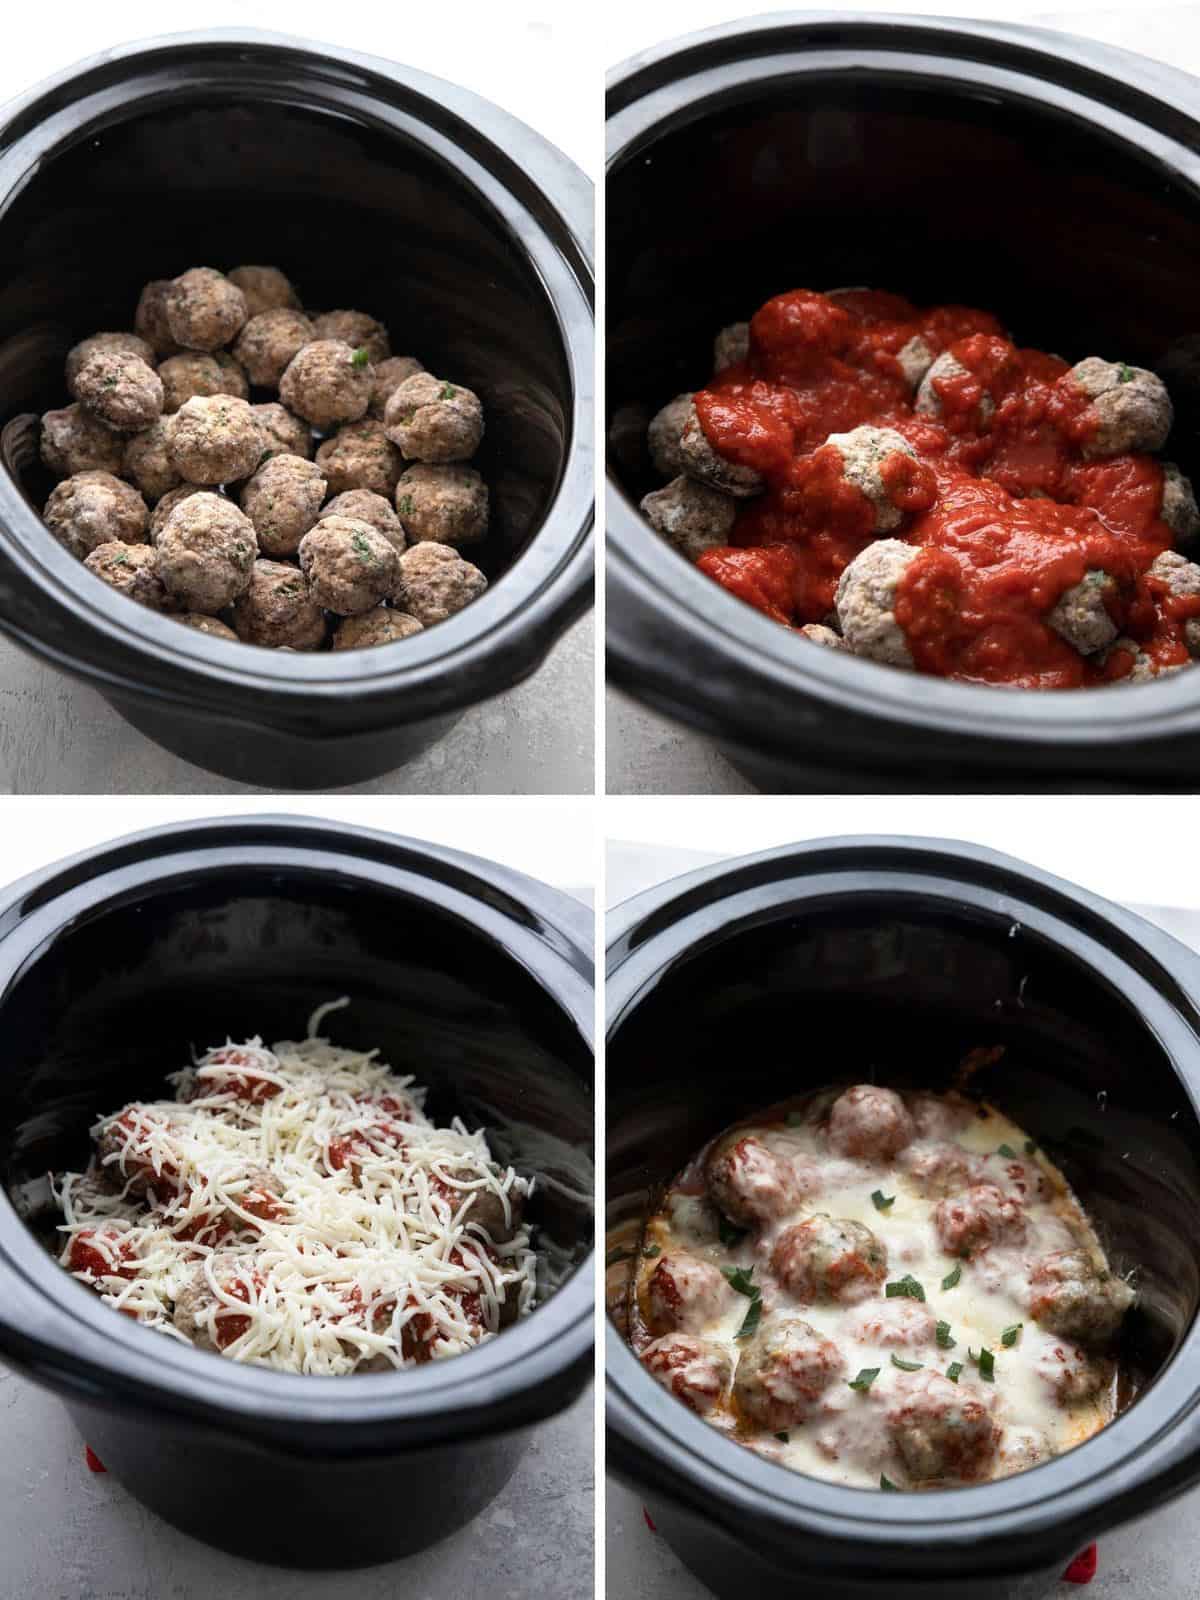 https://alldayidreamaboutfood.com/wp-content/uploads/2022/02/How-to-keto-meatball-casserole.jpg